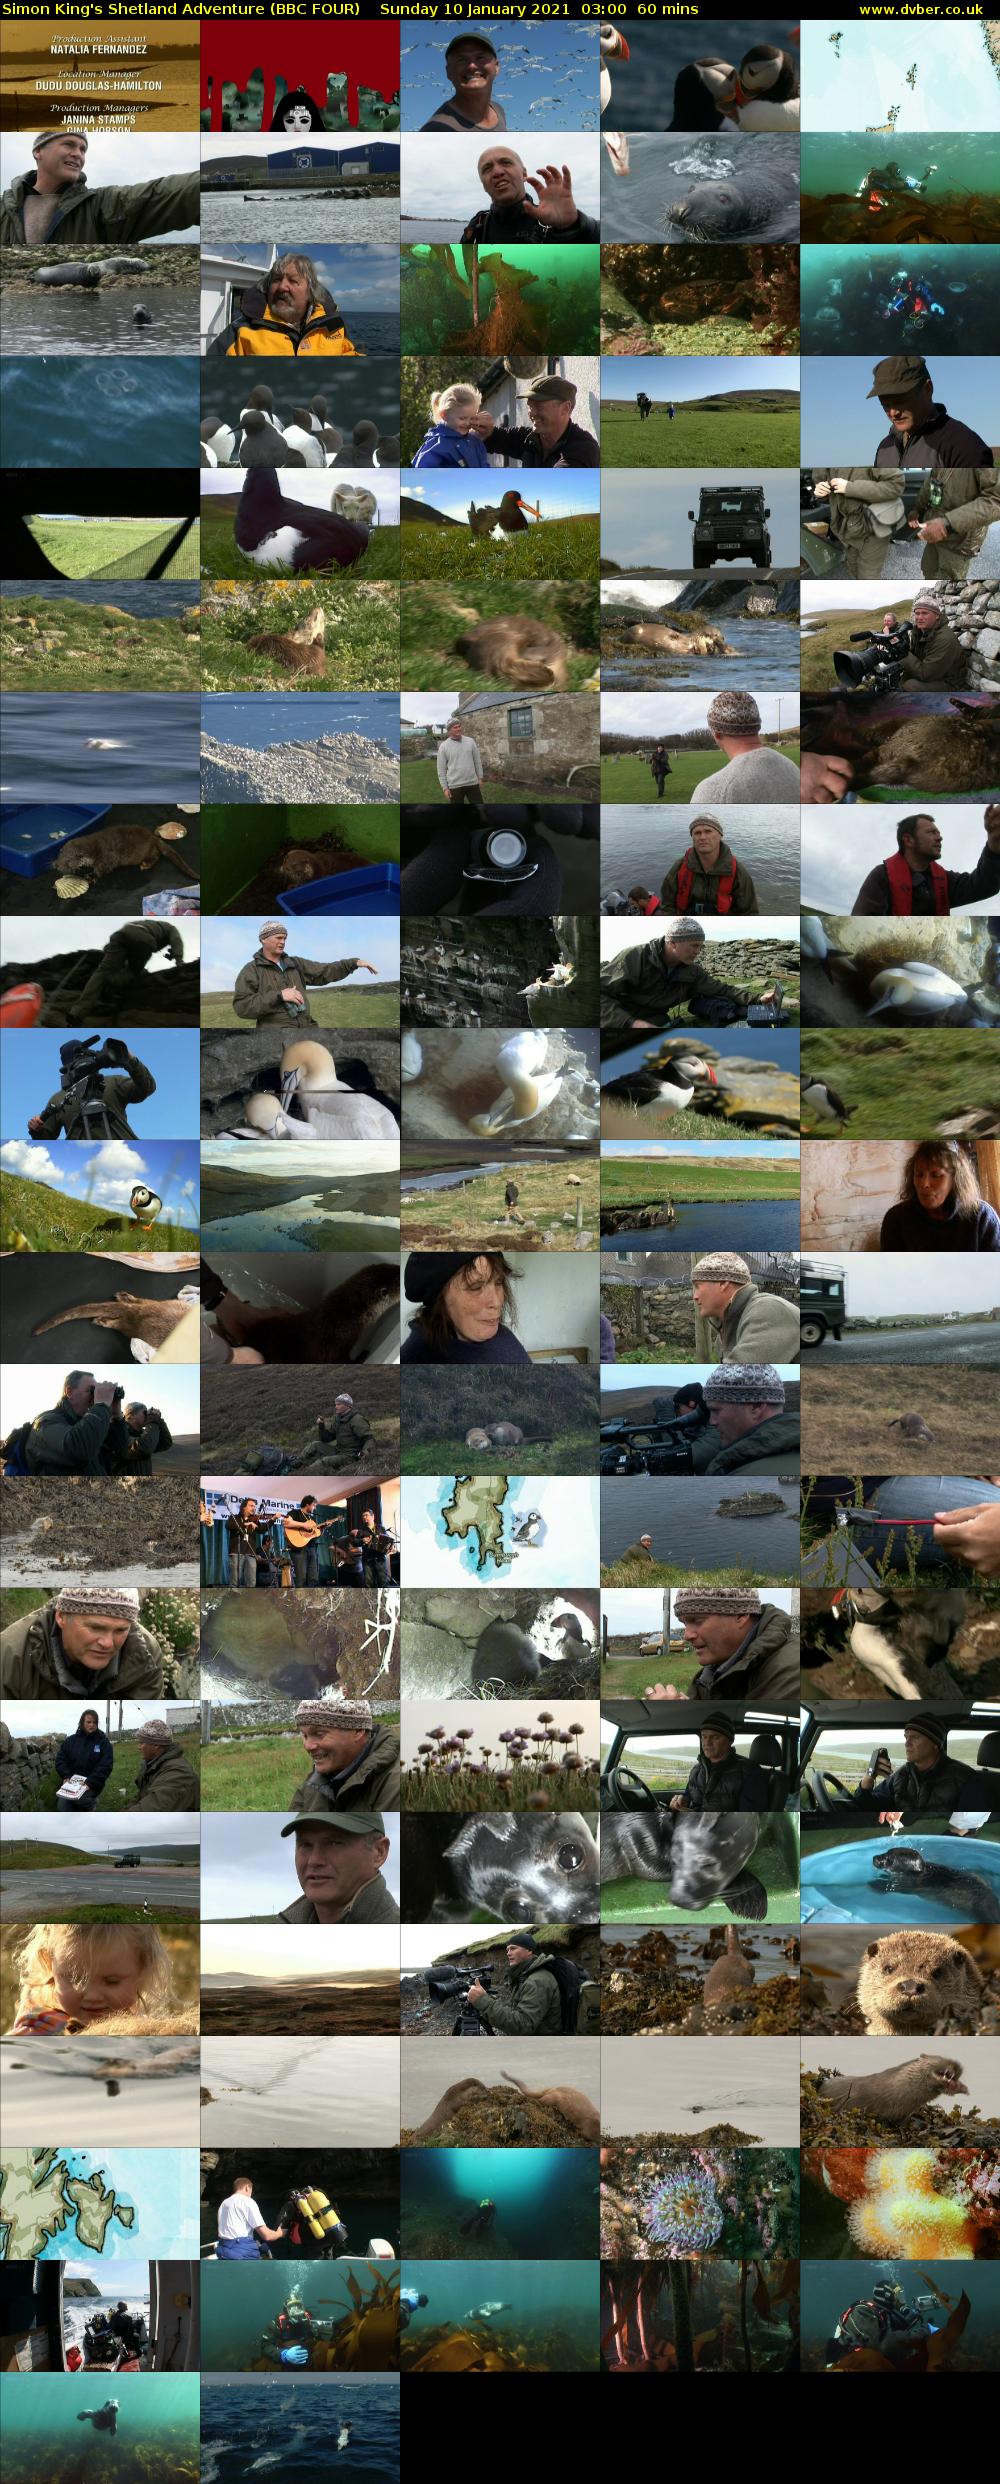 Simon King's Shetland Adventure (BBC FOUR) Sunday 10 January 2021 03:00 - 04:00